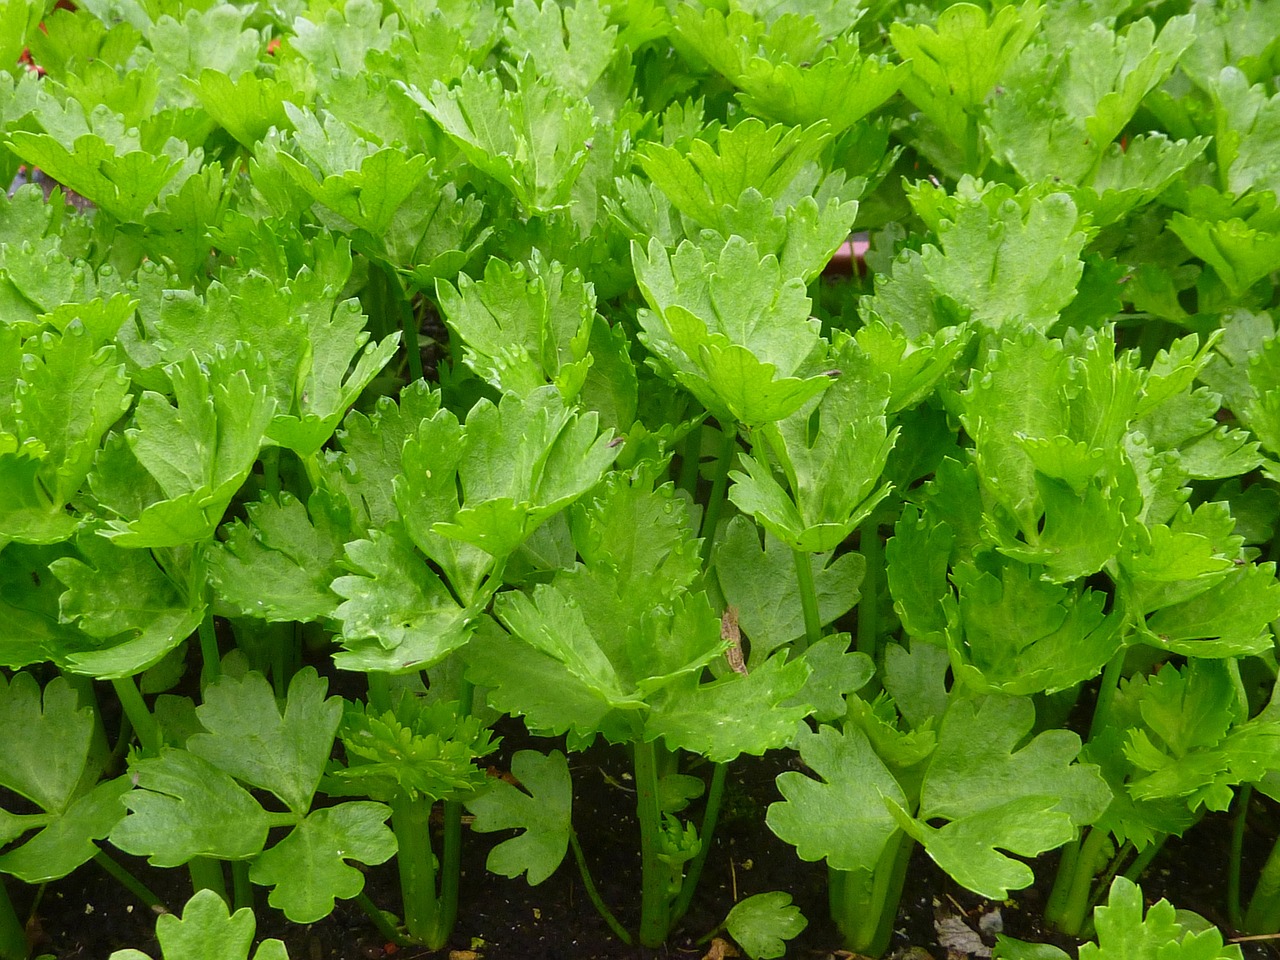 a close up of a bunch of green plants, hurufiyya, celery man, listing image, after rain, medium detail